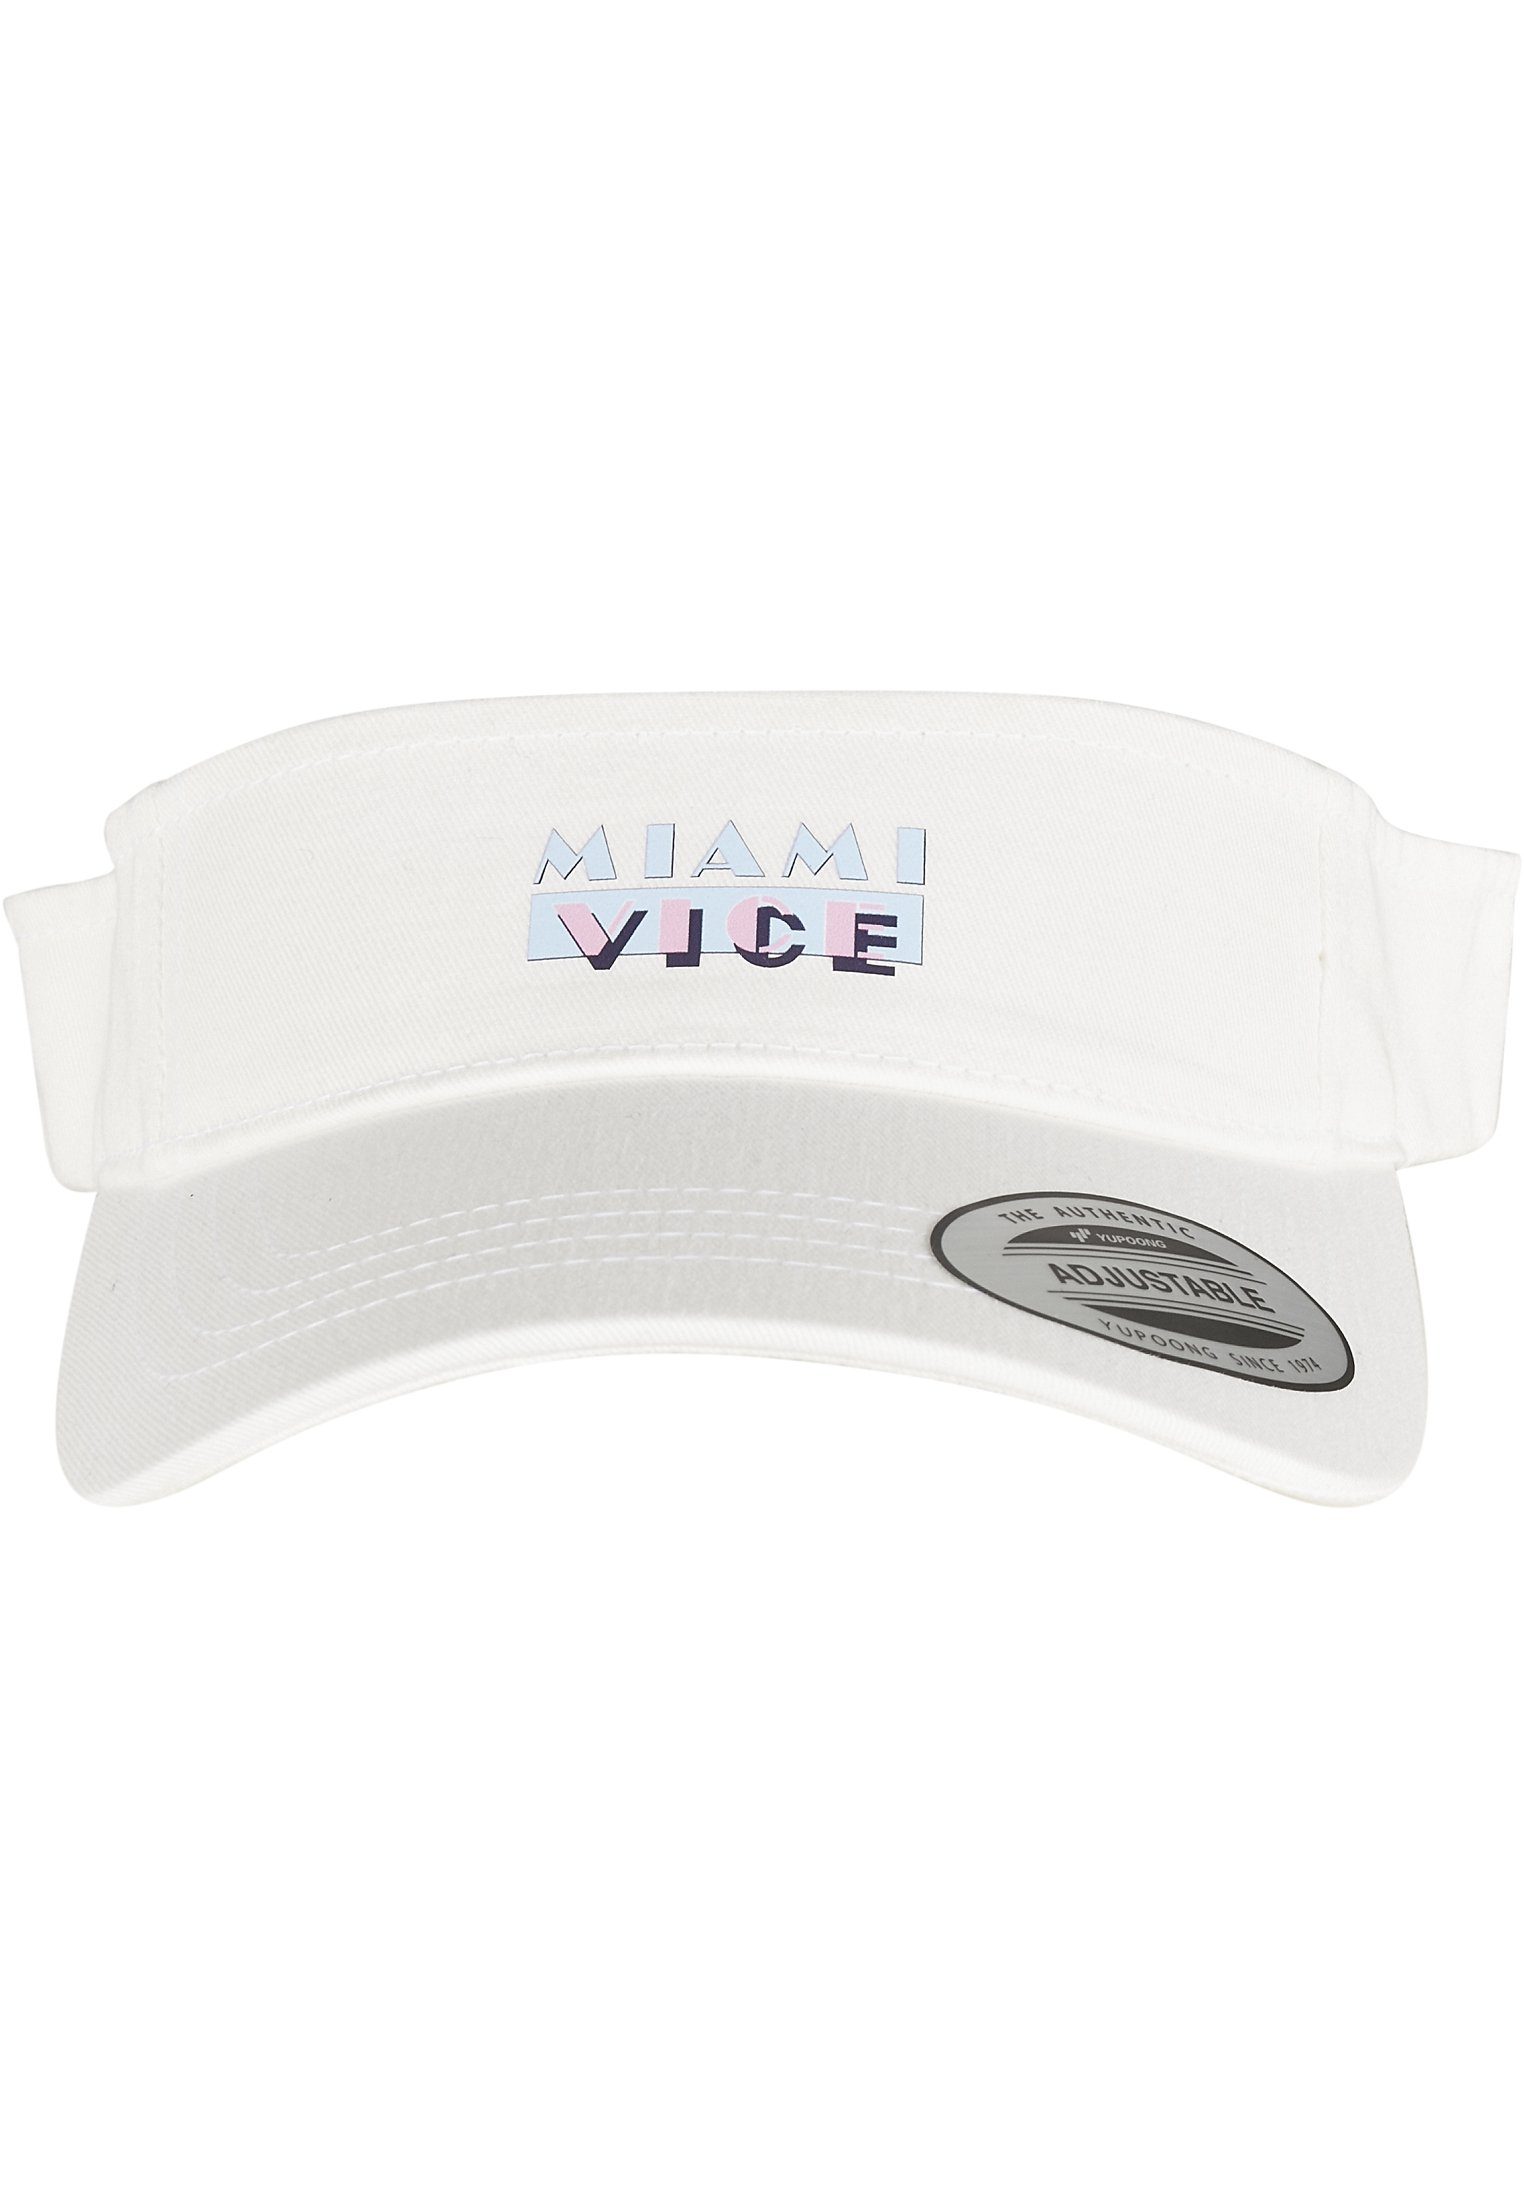 Vice Miami Logo Bucket Cap Merchcode Hat Visor Snapback Cap